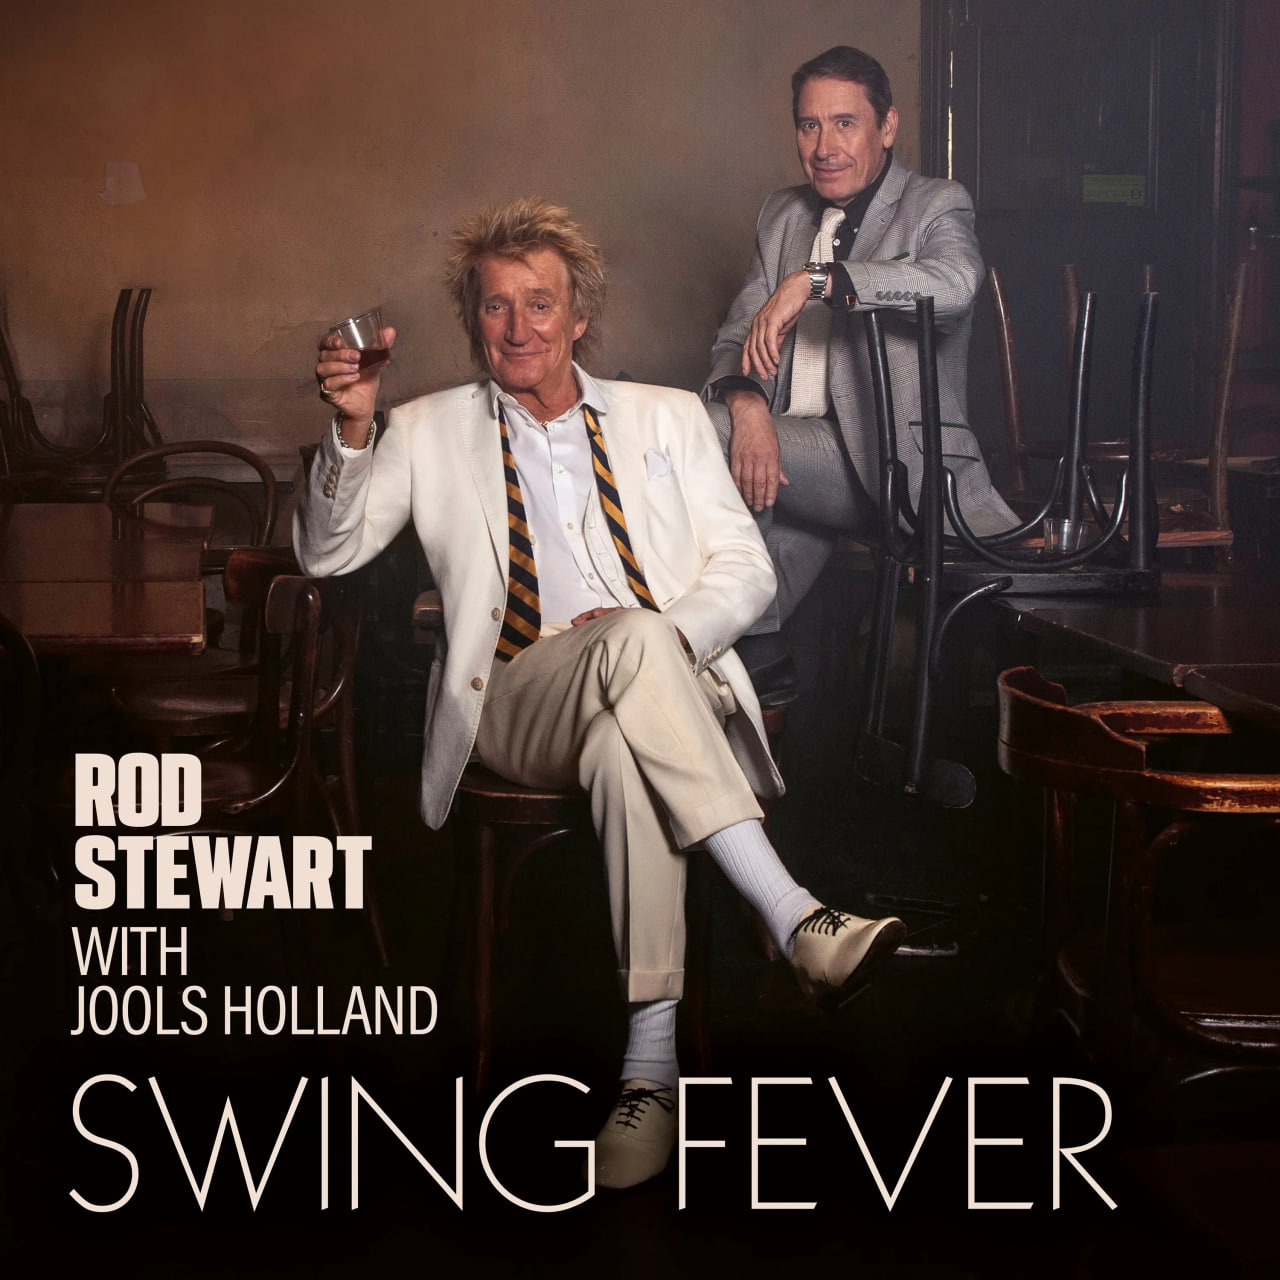 Джаз Warner Music Rod Stewart, Holland, Jools - Swing Fever (Green Vinyl LP) giorgio moroder forever dancing disco fever 1 cd